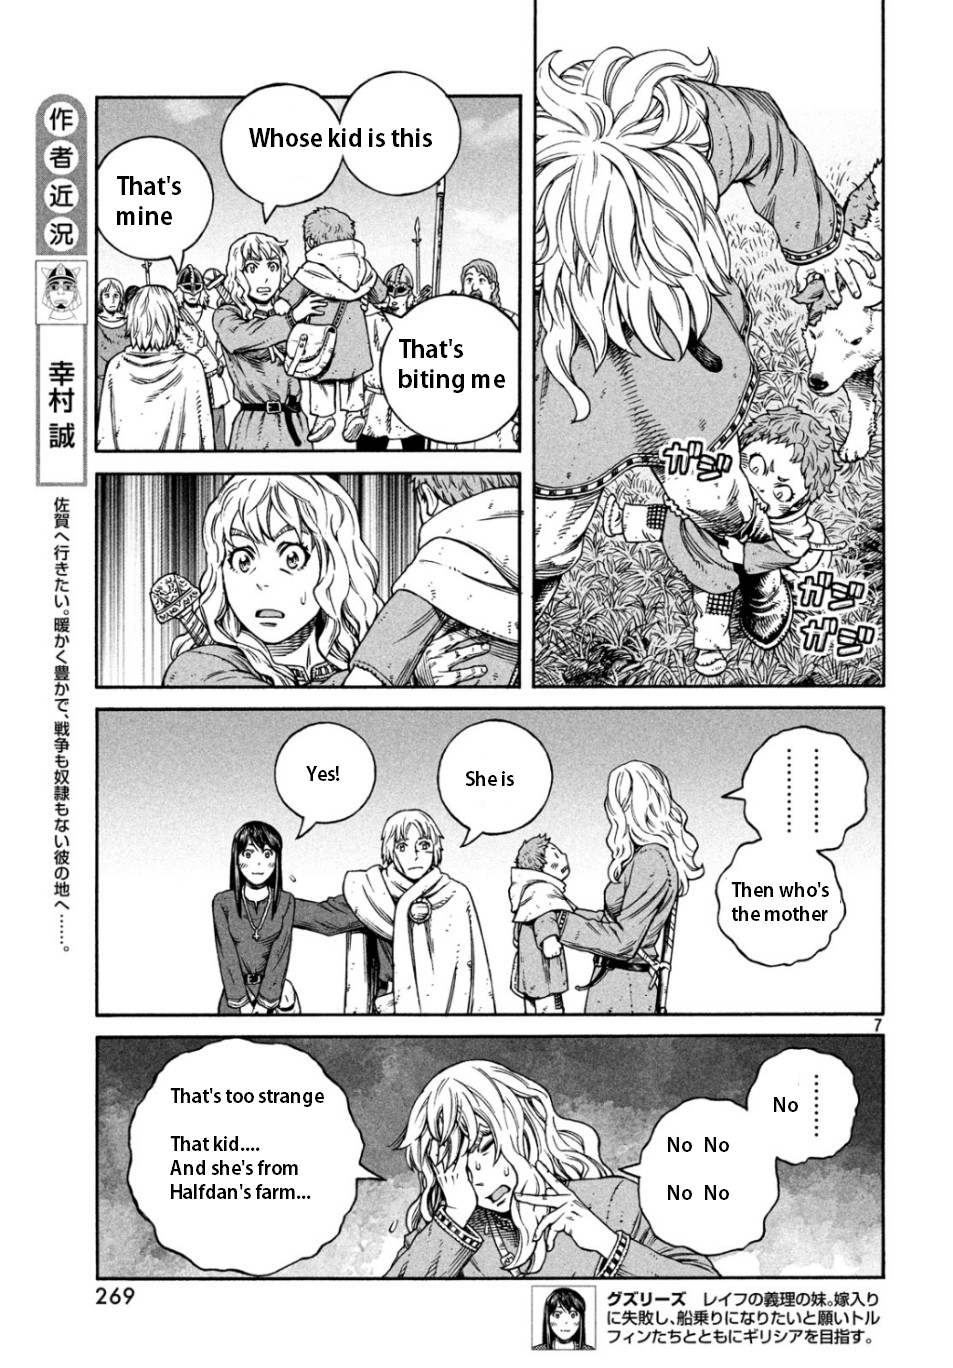 Vinland Saga Manga Manga Chapter - 166 - image 8